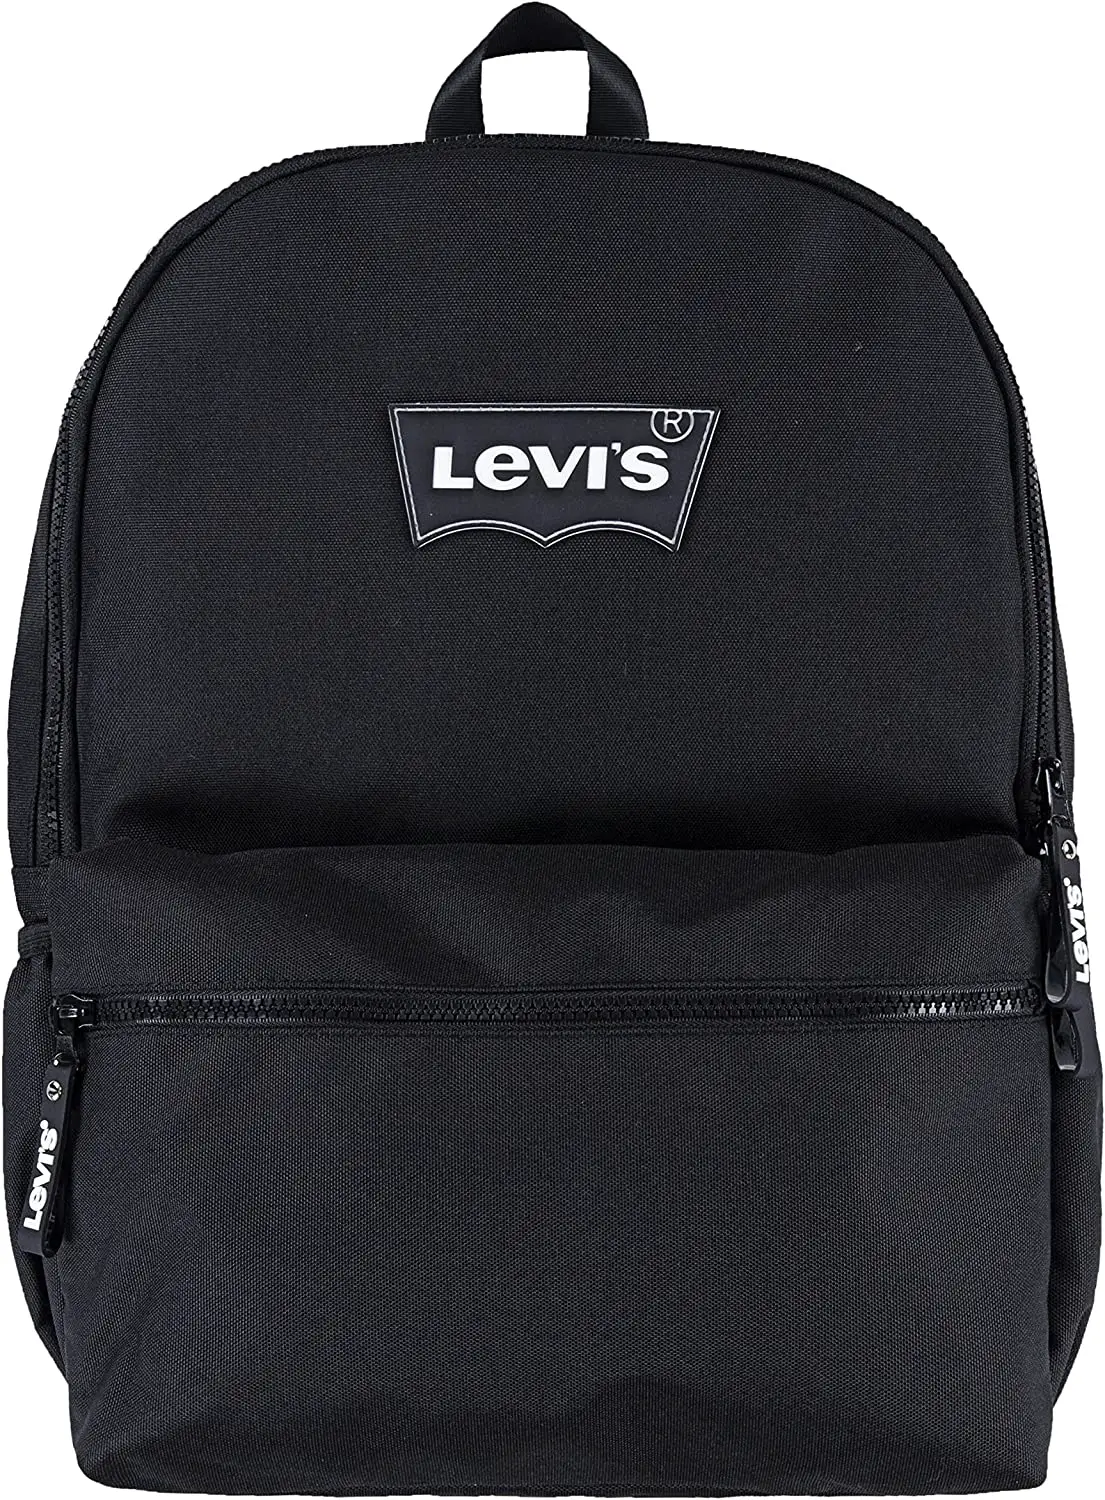 Levis Unisex Adults Classic Logo Backpack Black